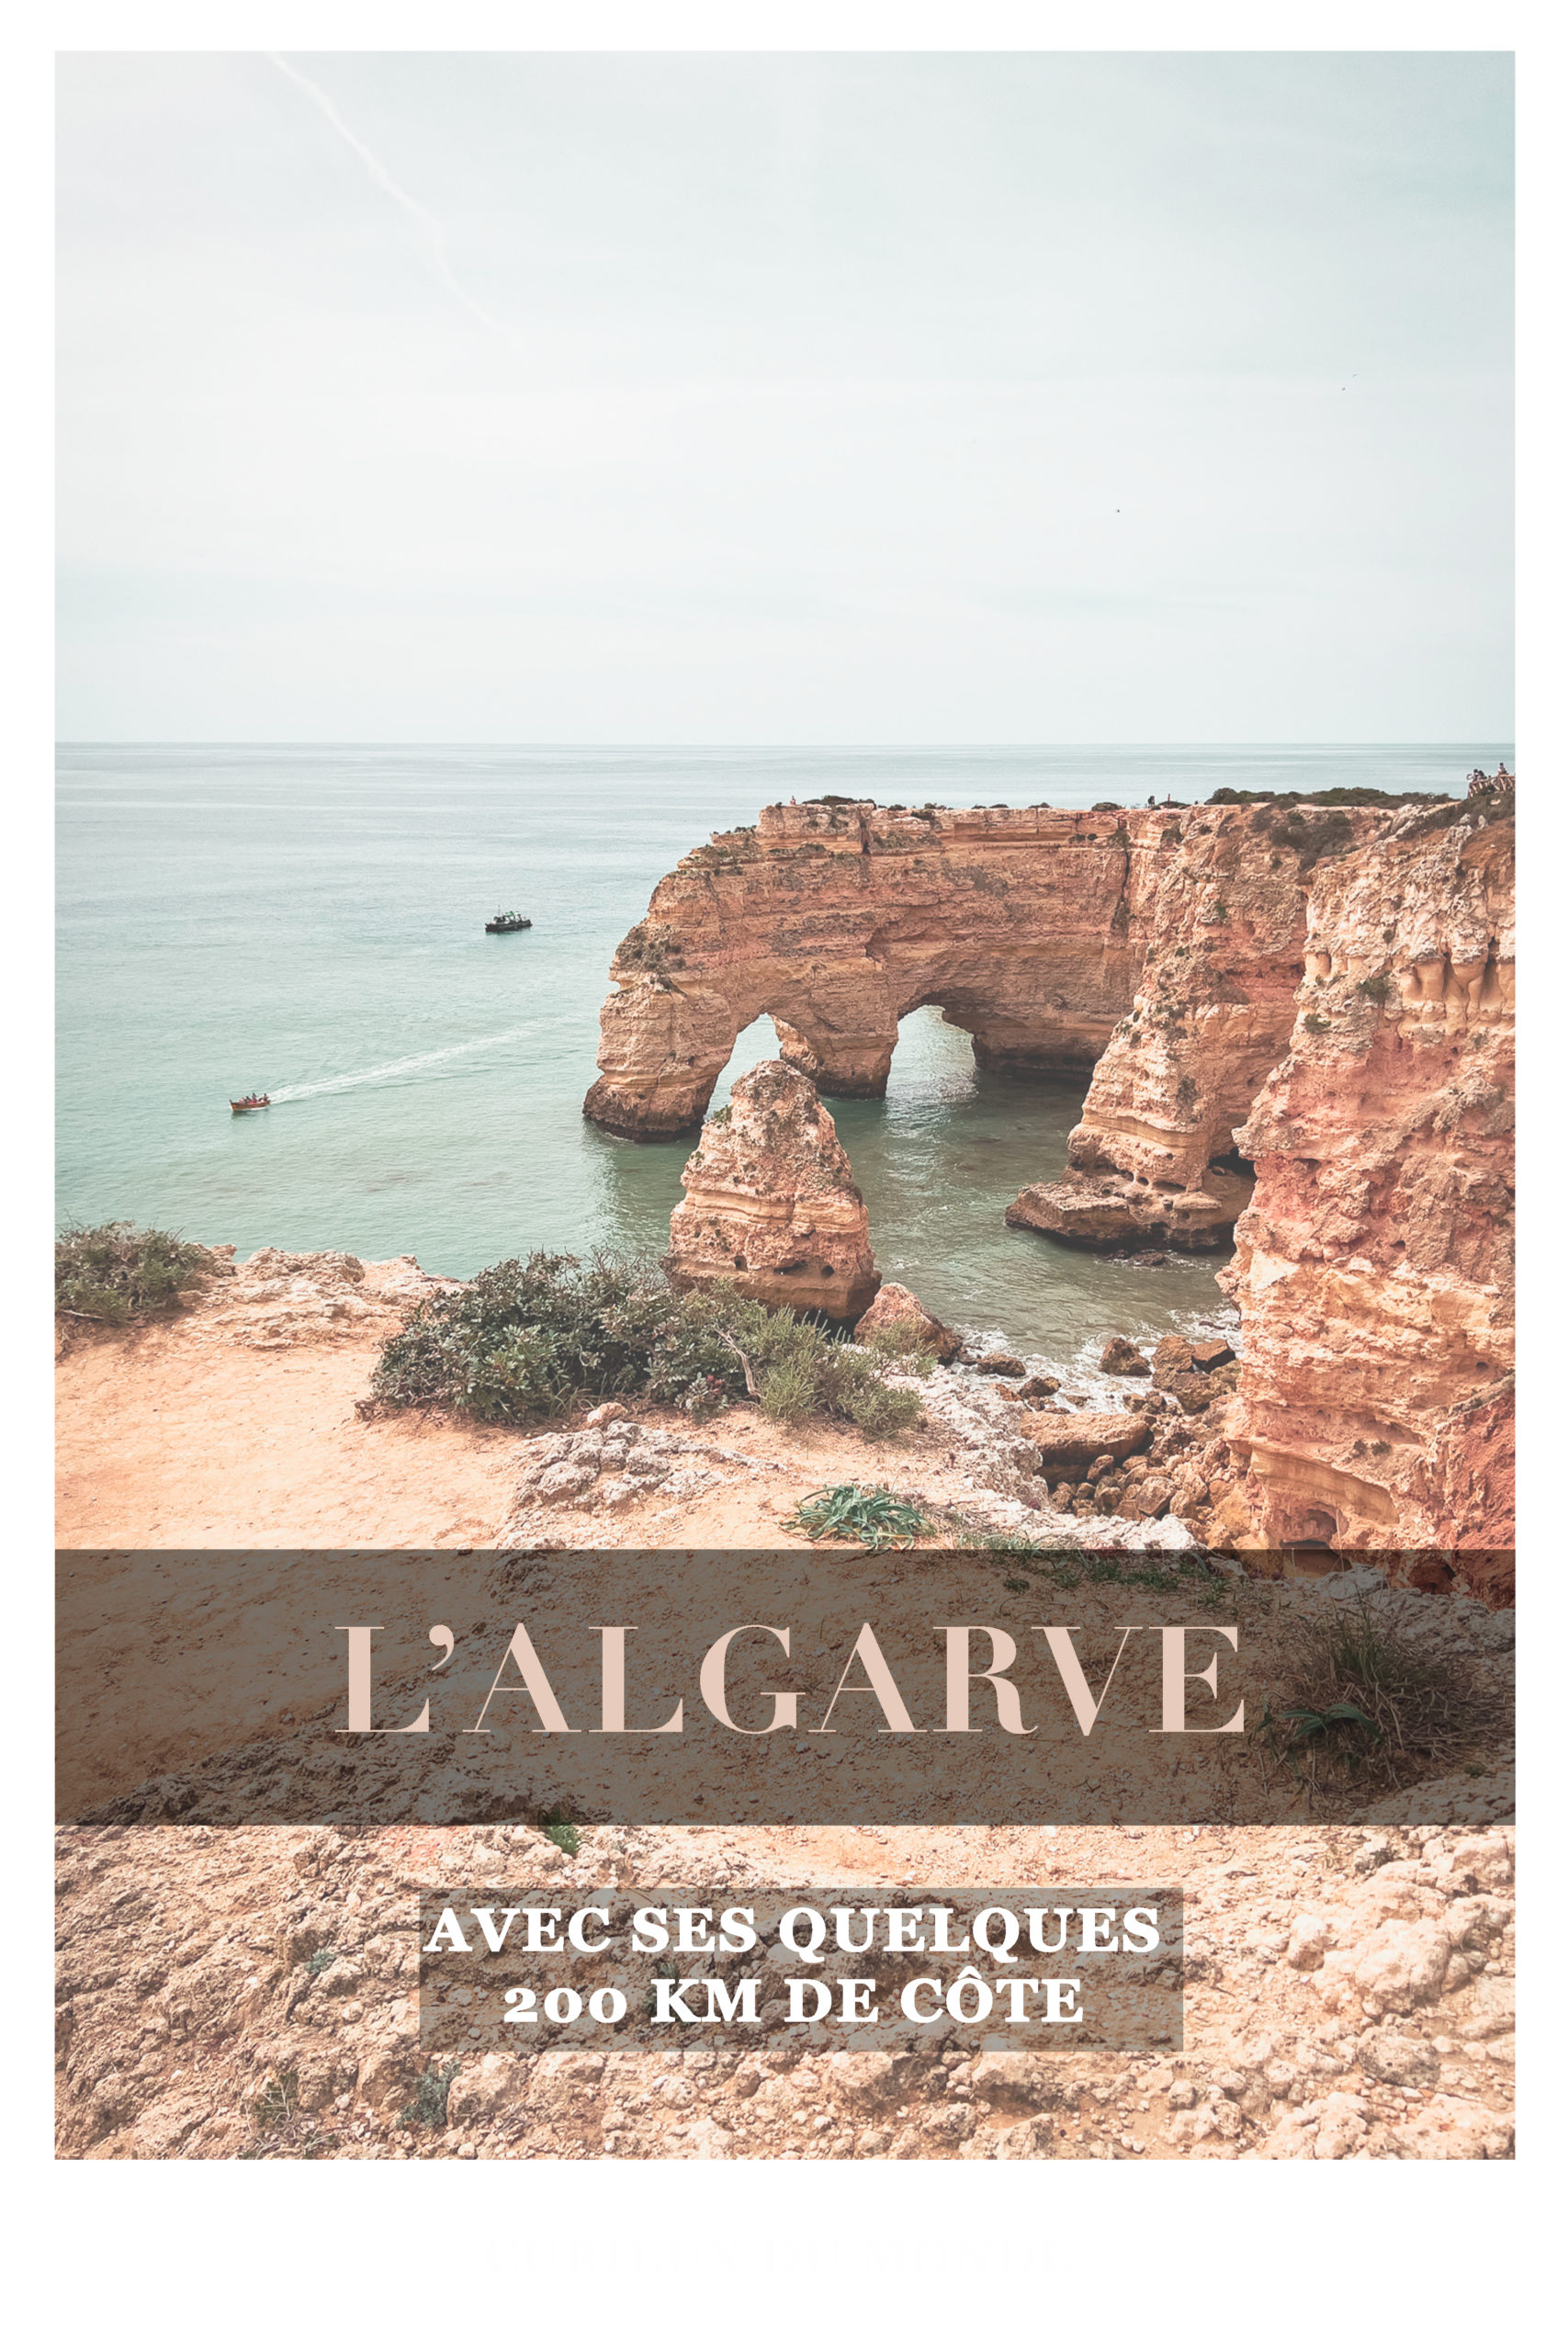 Travels blakeproduction / Algarve